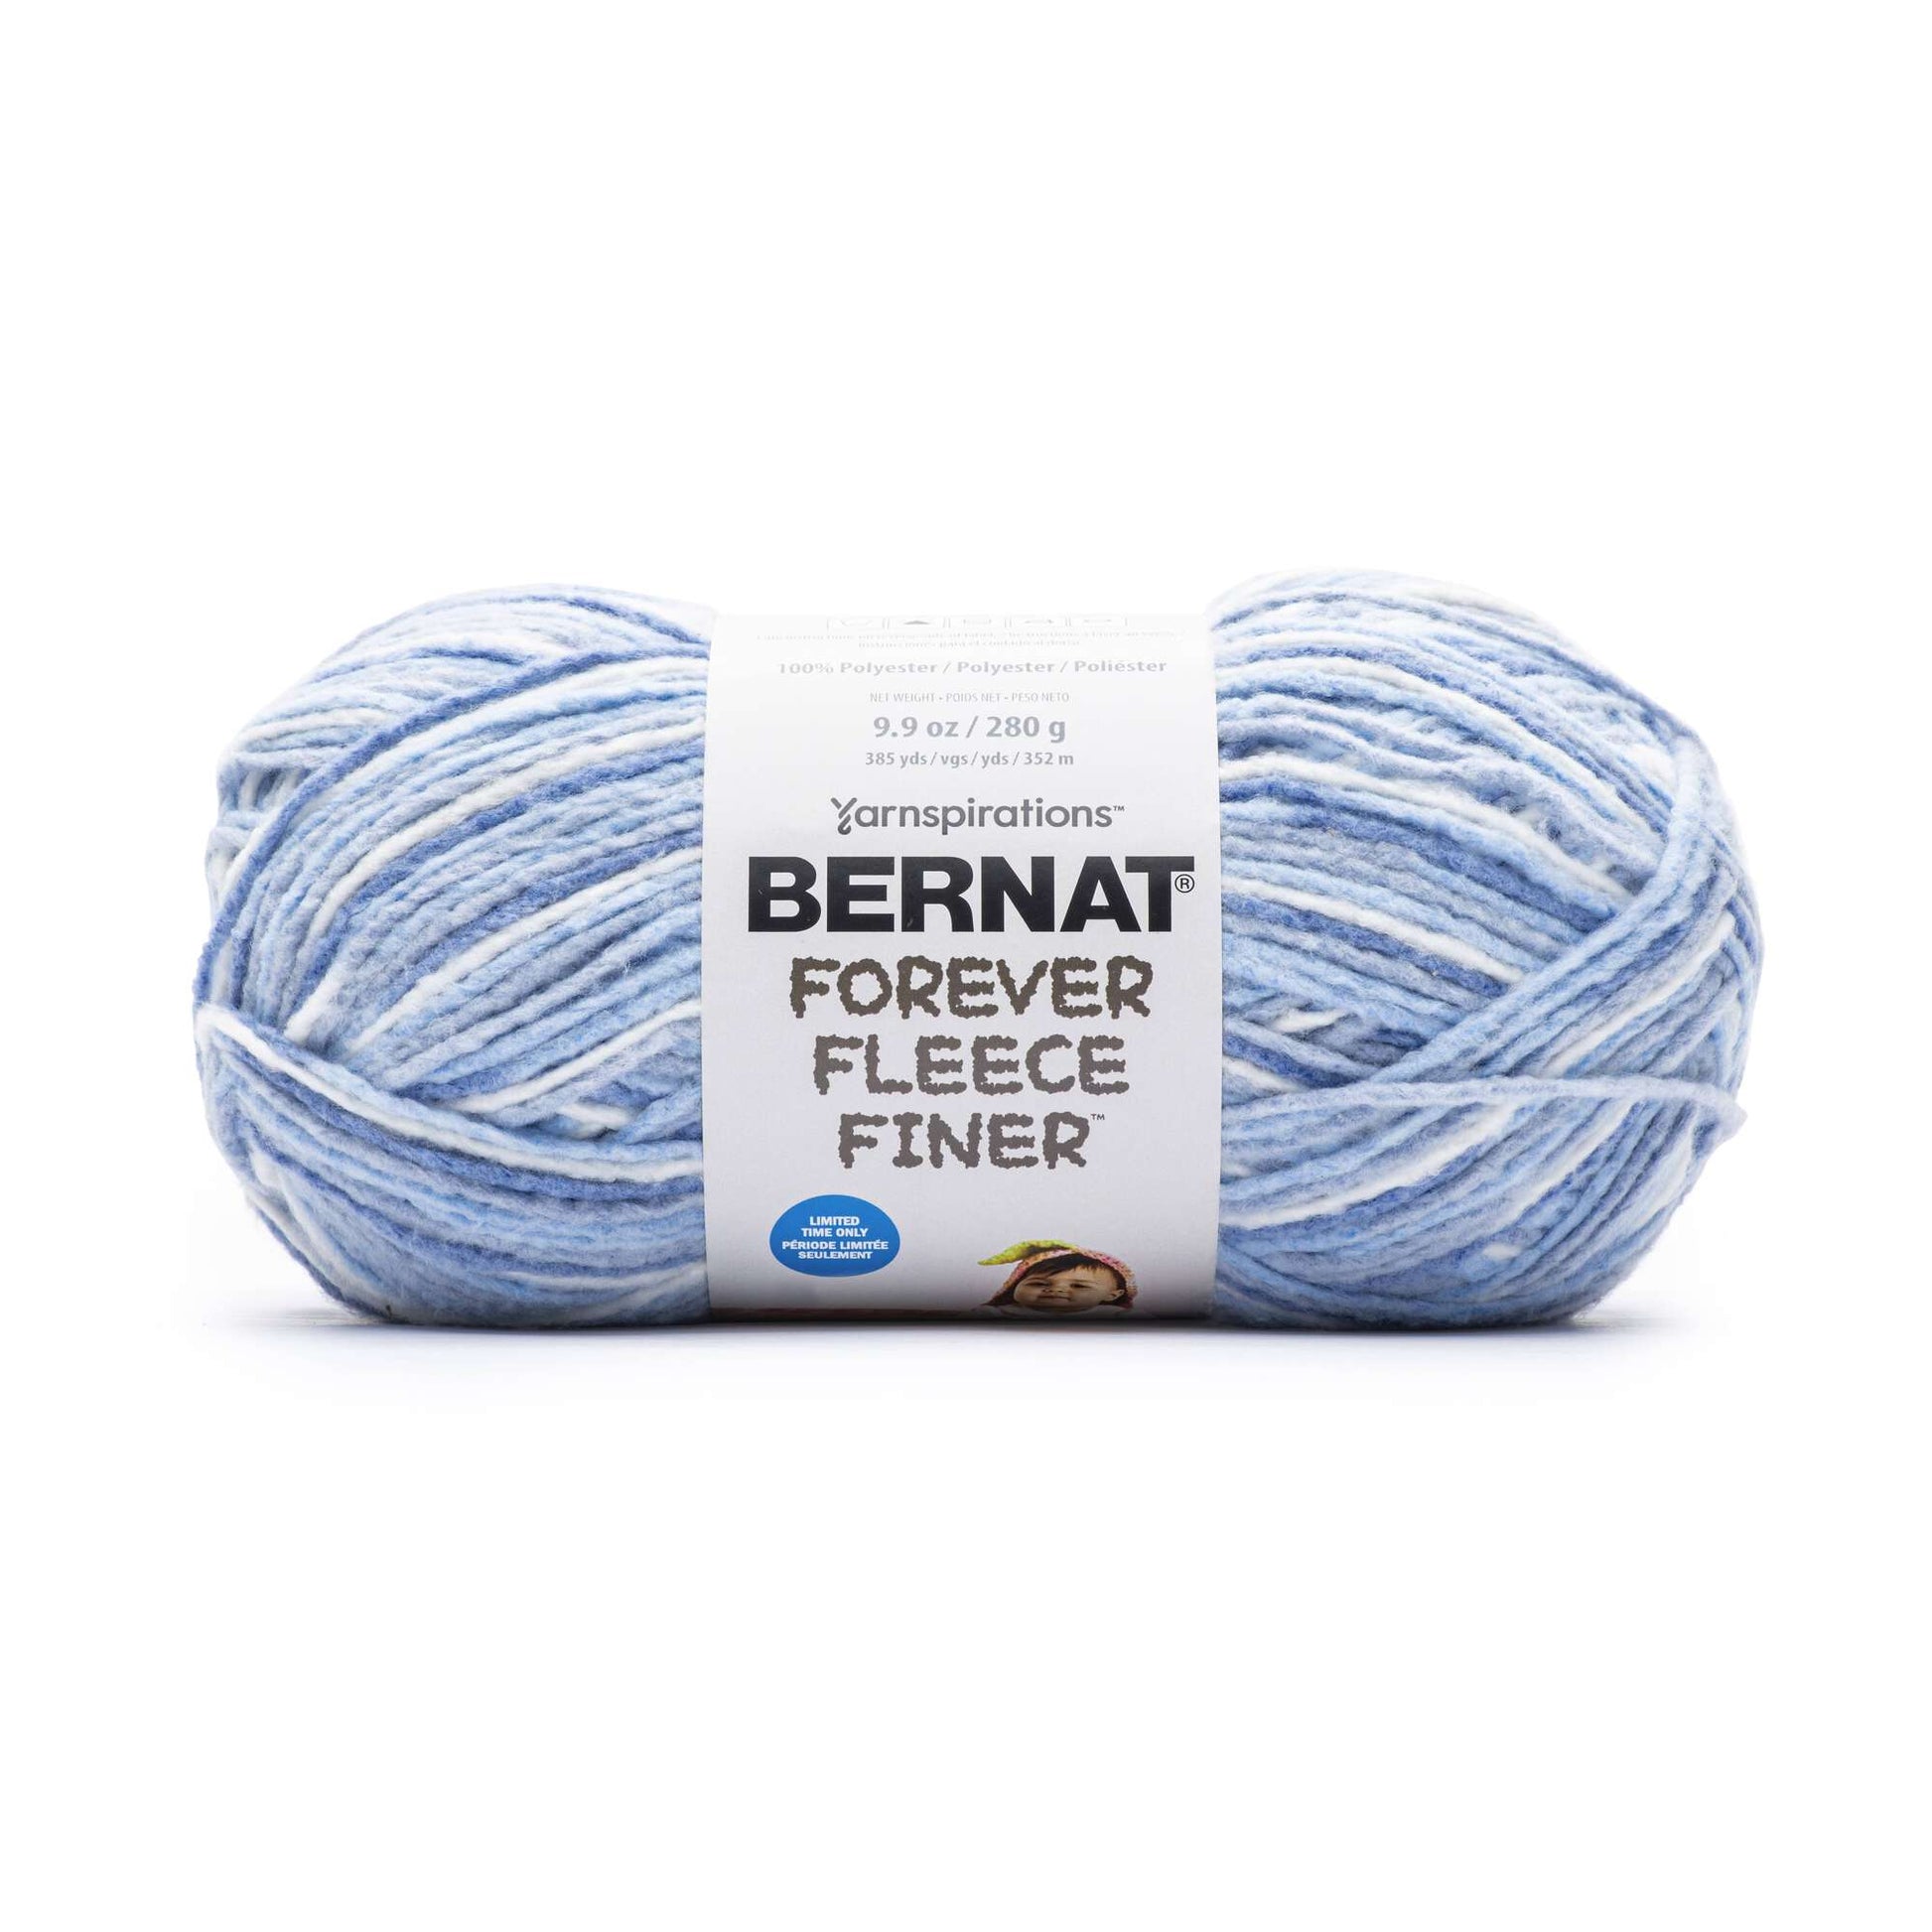 Bernat Forever Fleece Finer Yarn - Discontinued Shades Blueberry Ice